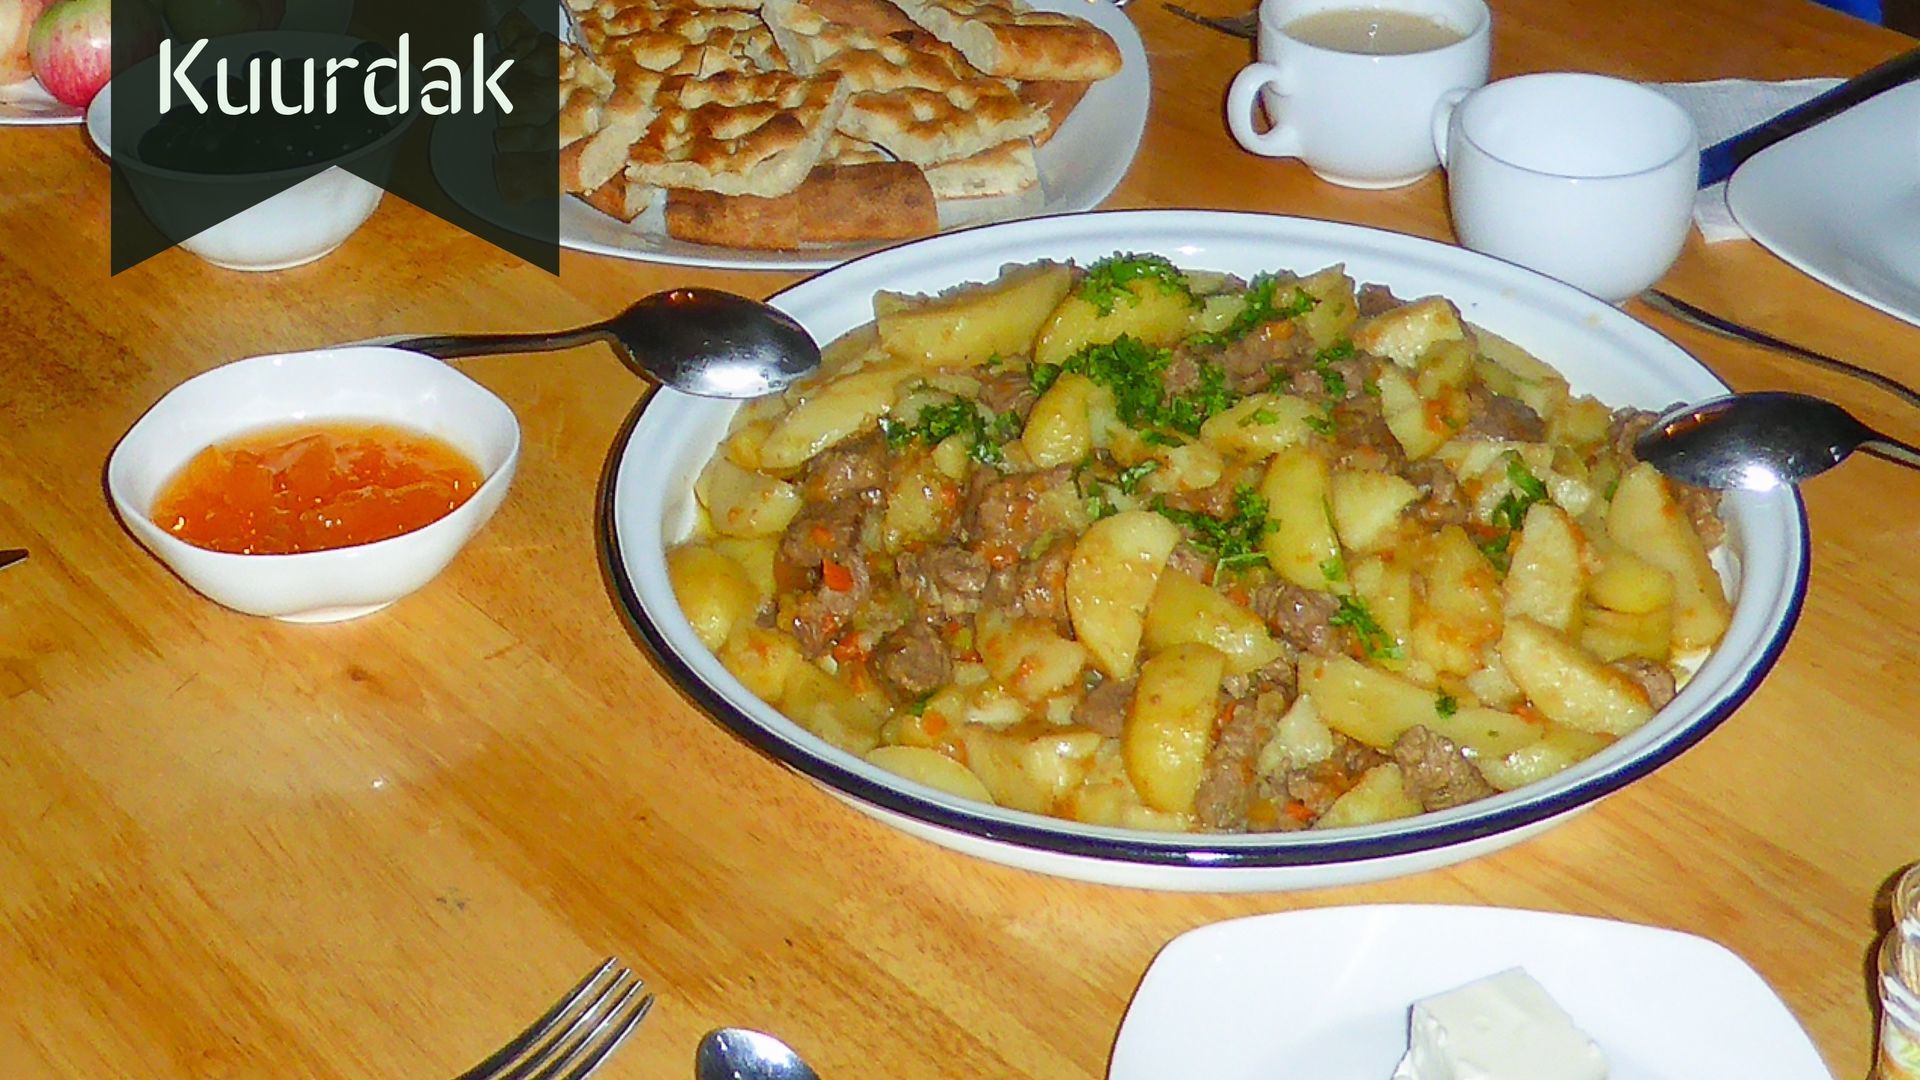 Kuurdak-Central Asian Dish